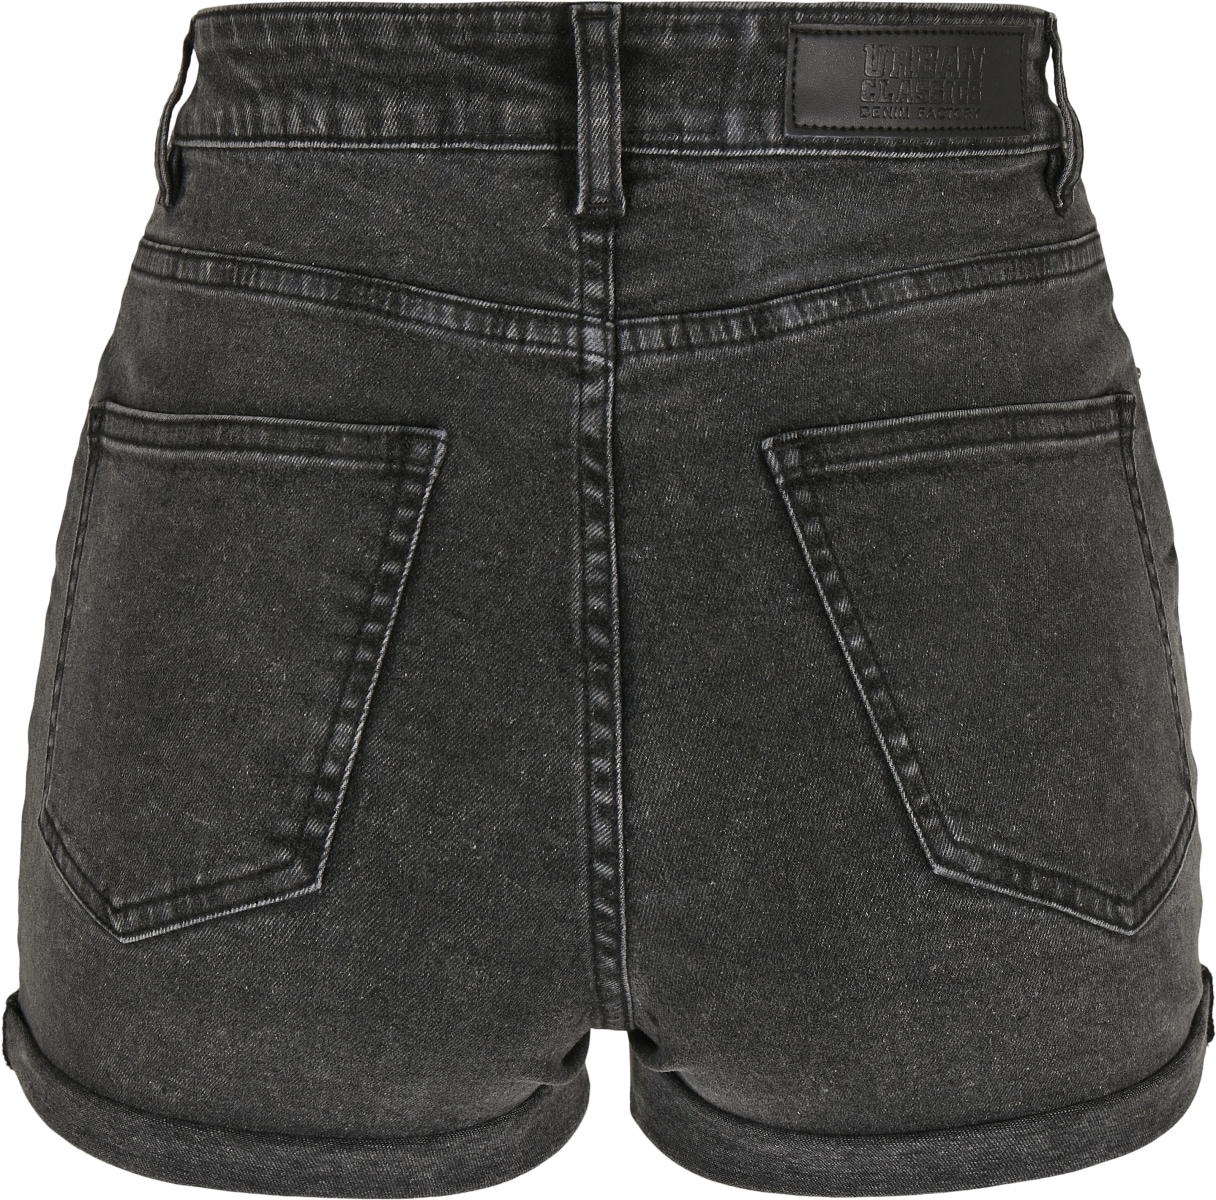 Pocket »Damen Ladies online (1 Shorts«, URBAN Stoffhose CLASSICS tlg.) 5